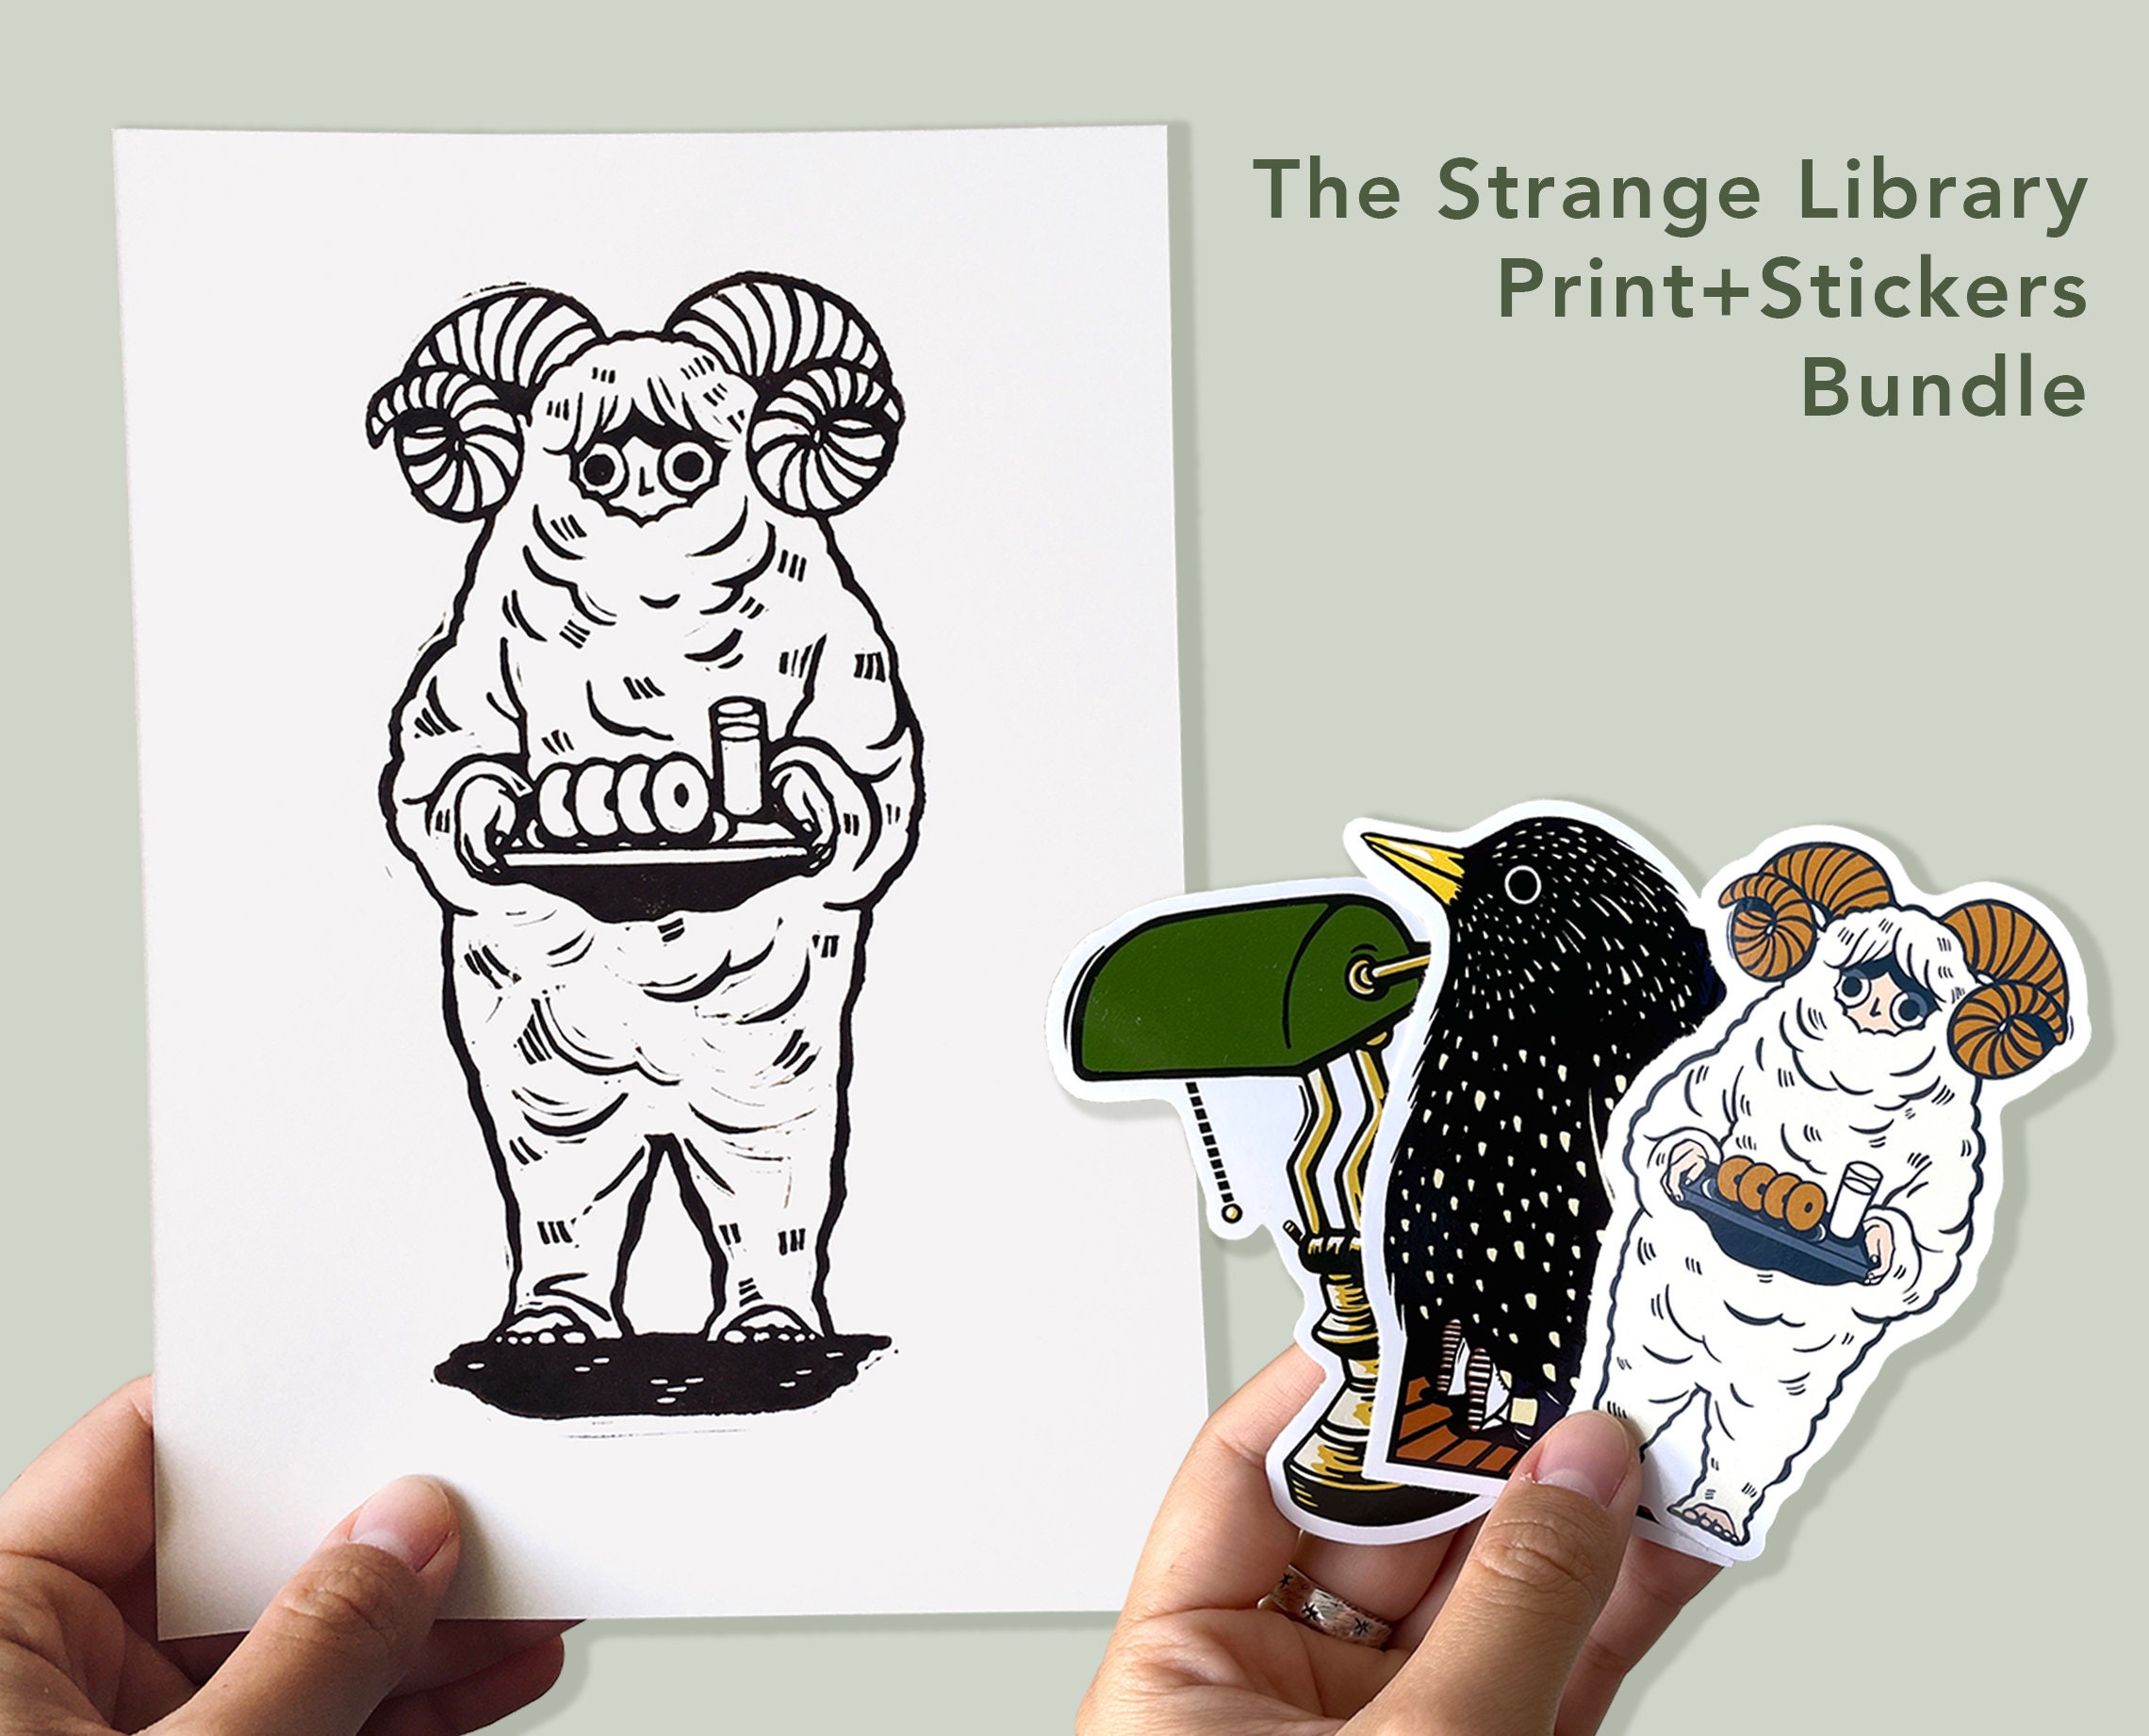 Life is Strange: True Colors Sticker Set